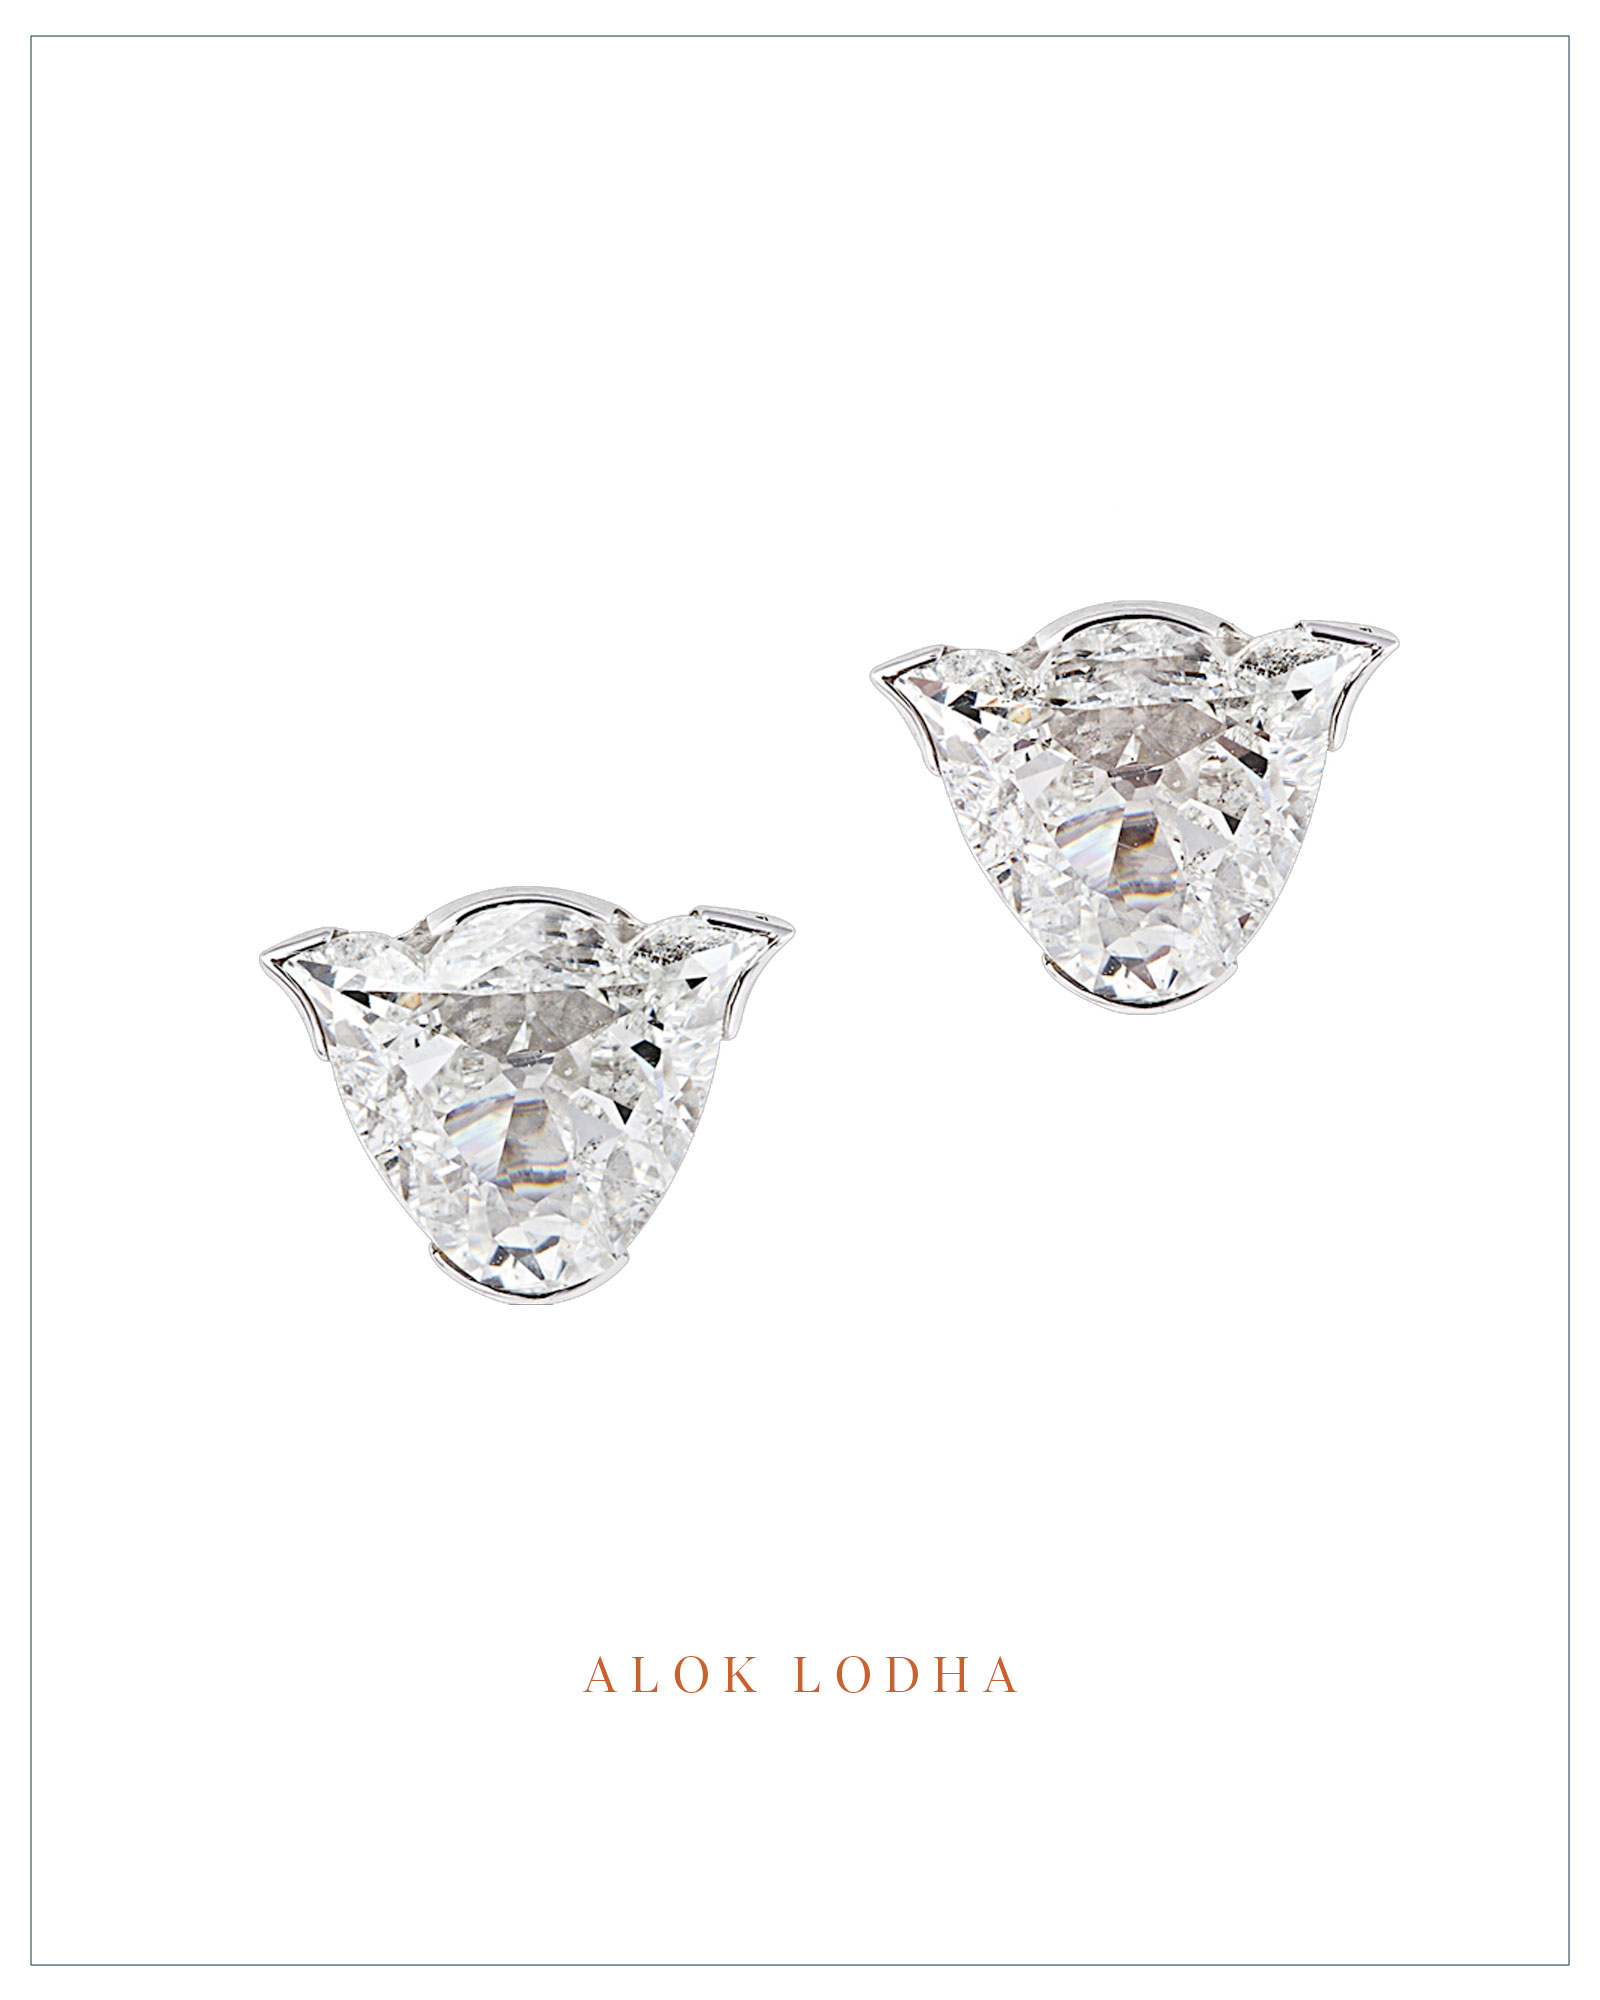 Alok Lodha Bloom La Tulipe earrings featuring tulip-shaped solitaire diamonds